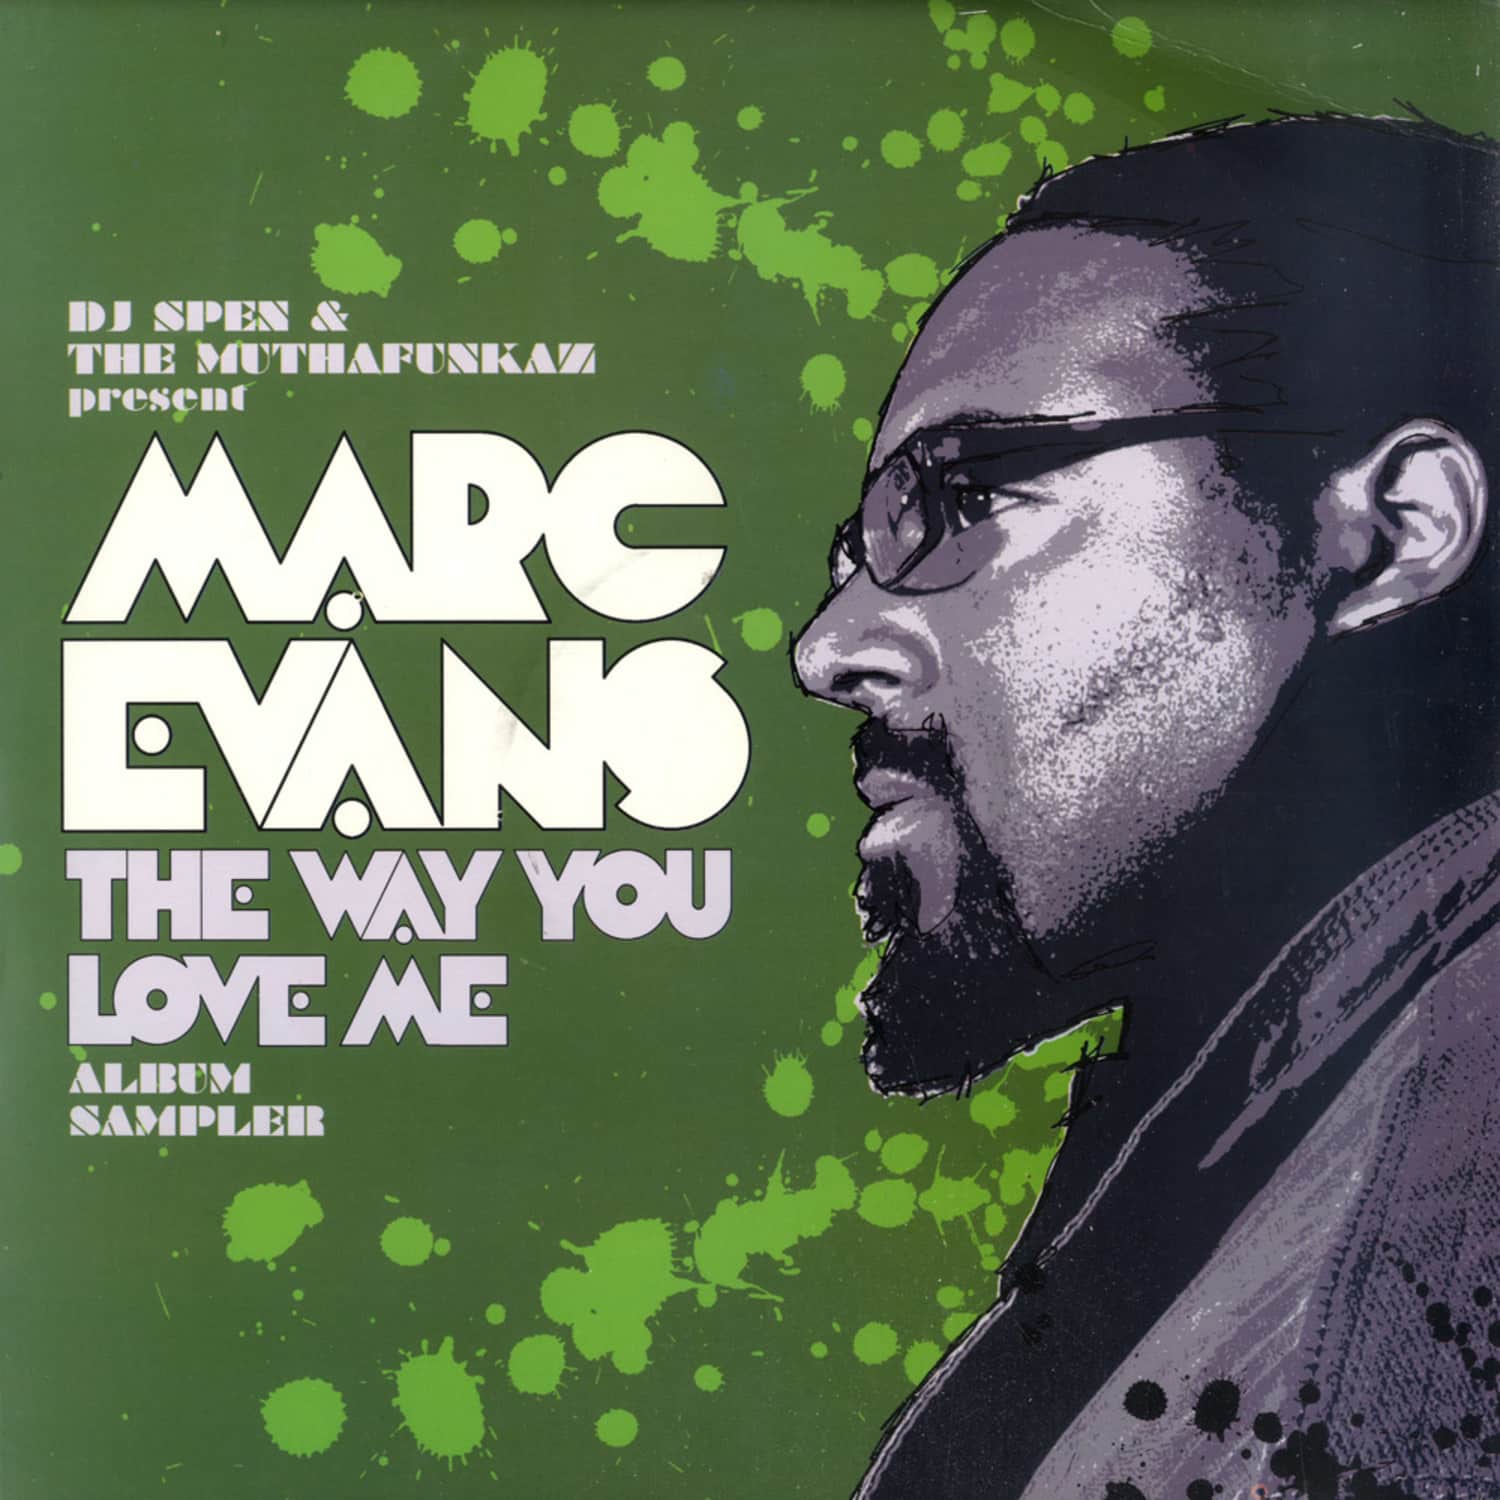 DJ Spen & The MuthaFunkaz present Marc Evans - THE WAY YOU LOVE ME / ALBUM SAMPLER